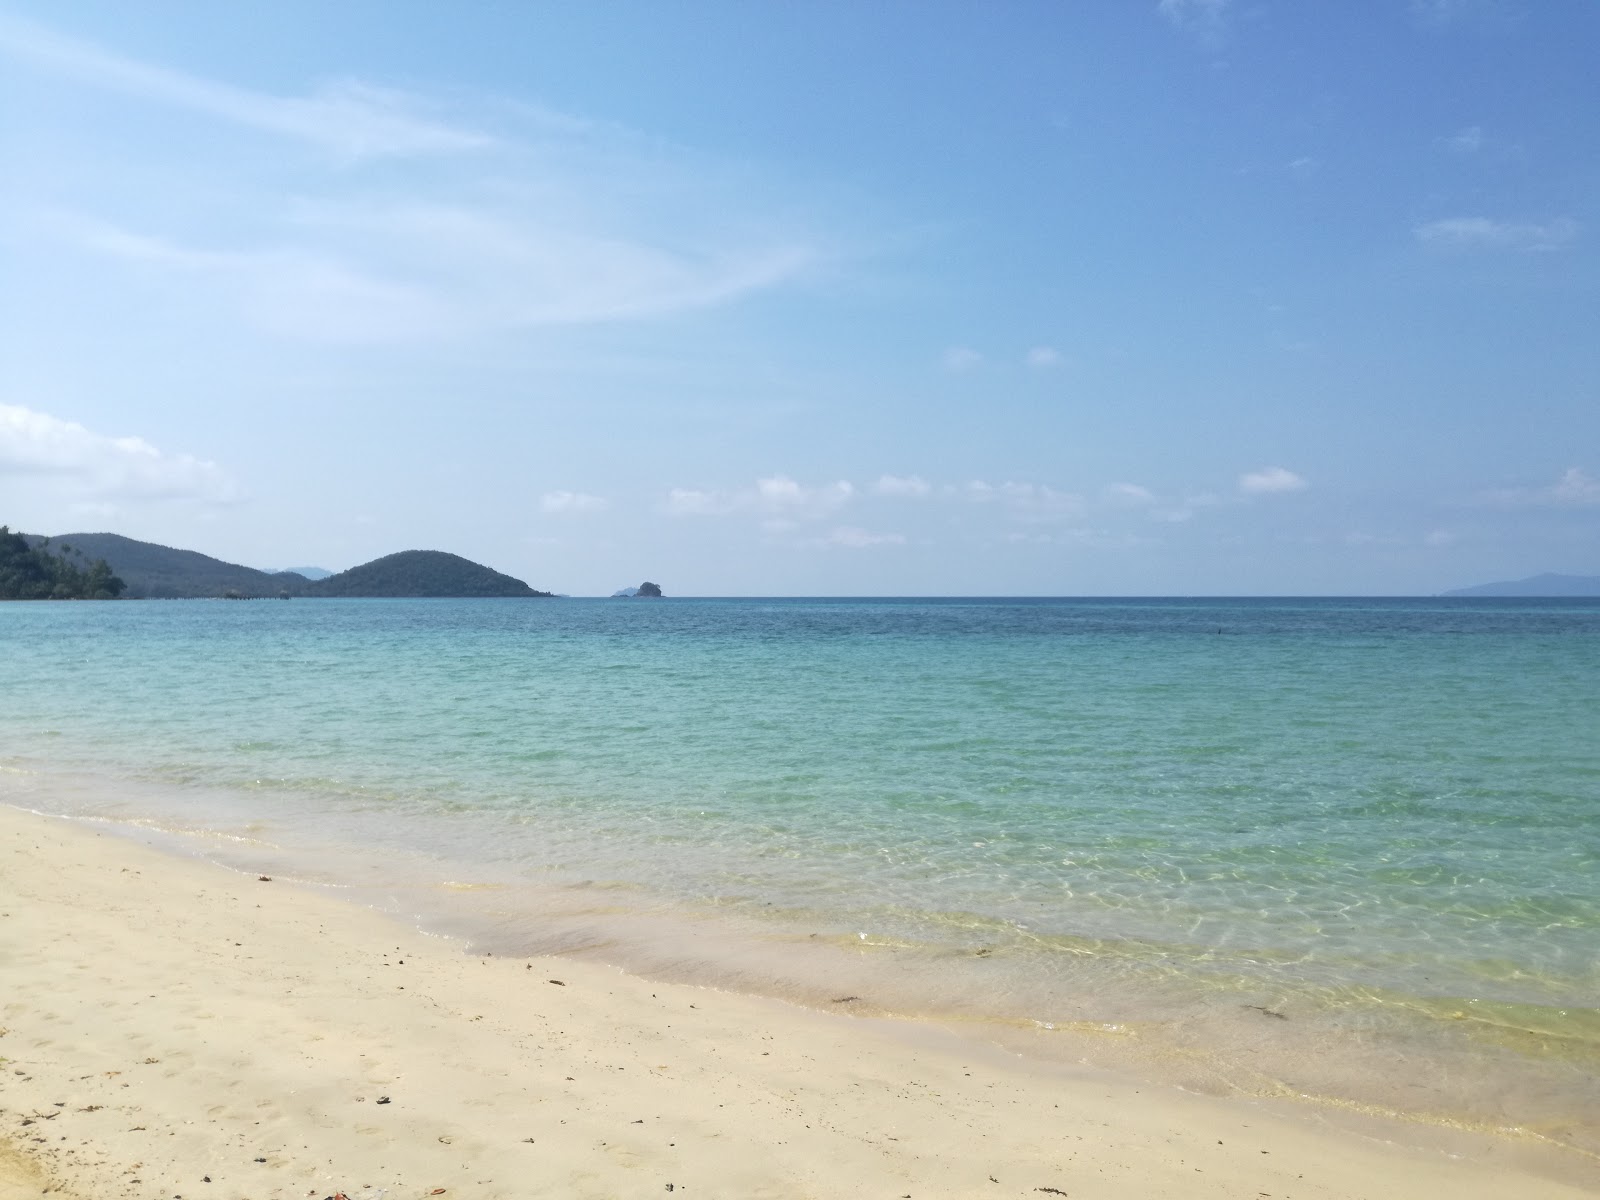 Foto af Ao Soun Yai Beach - populært sted blandt afslapningskendere